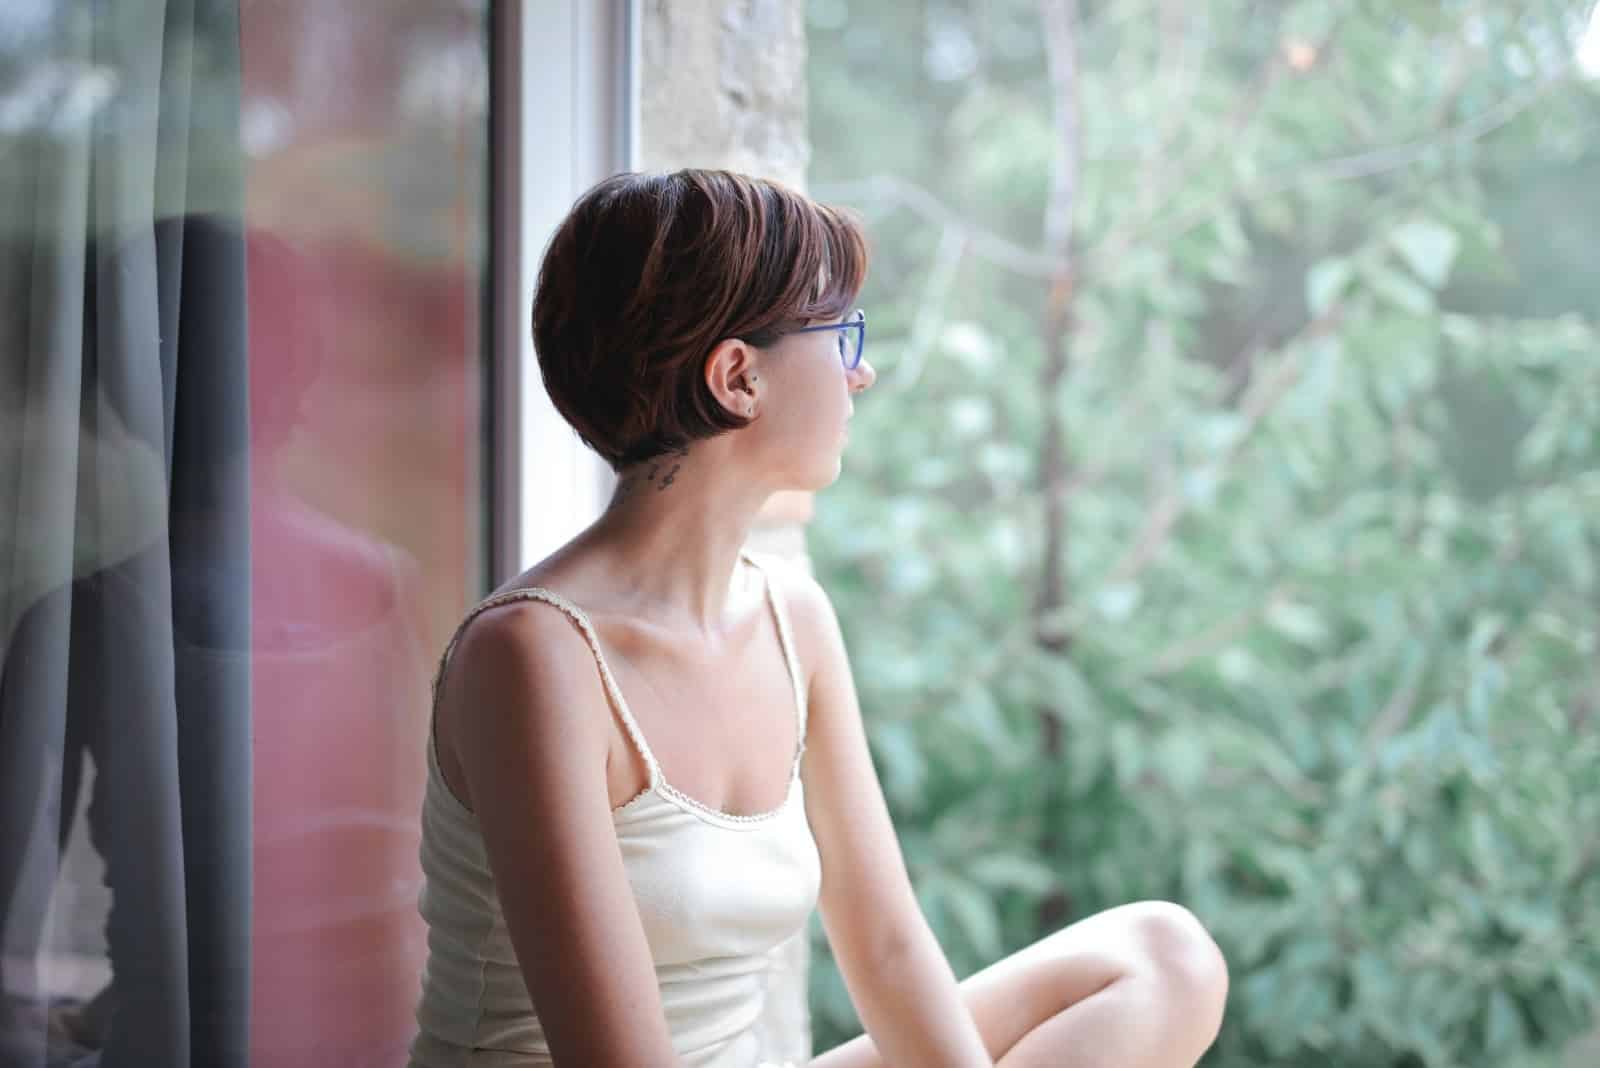 woman sitting on window pane looking through window